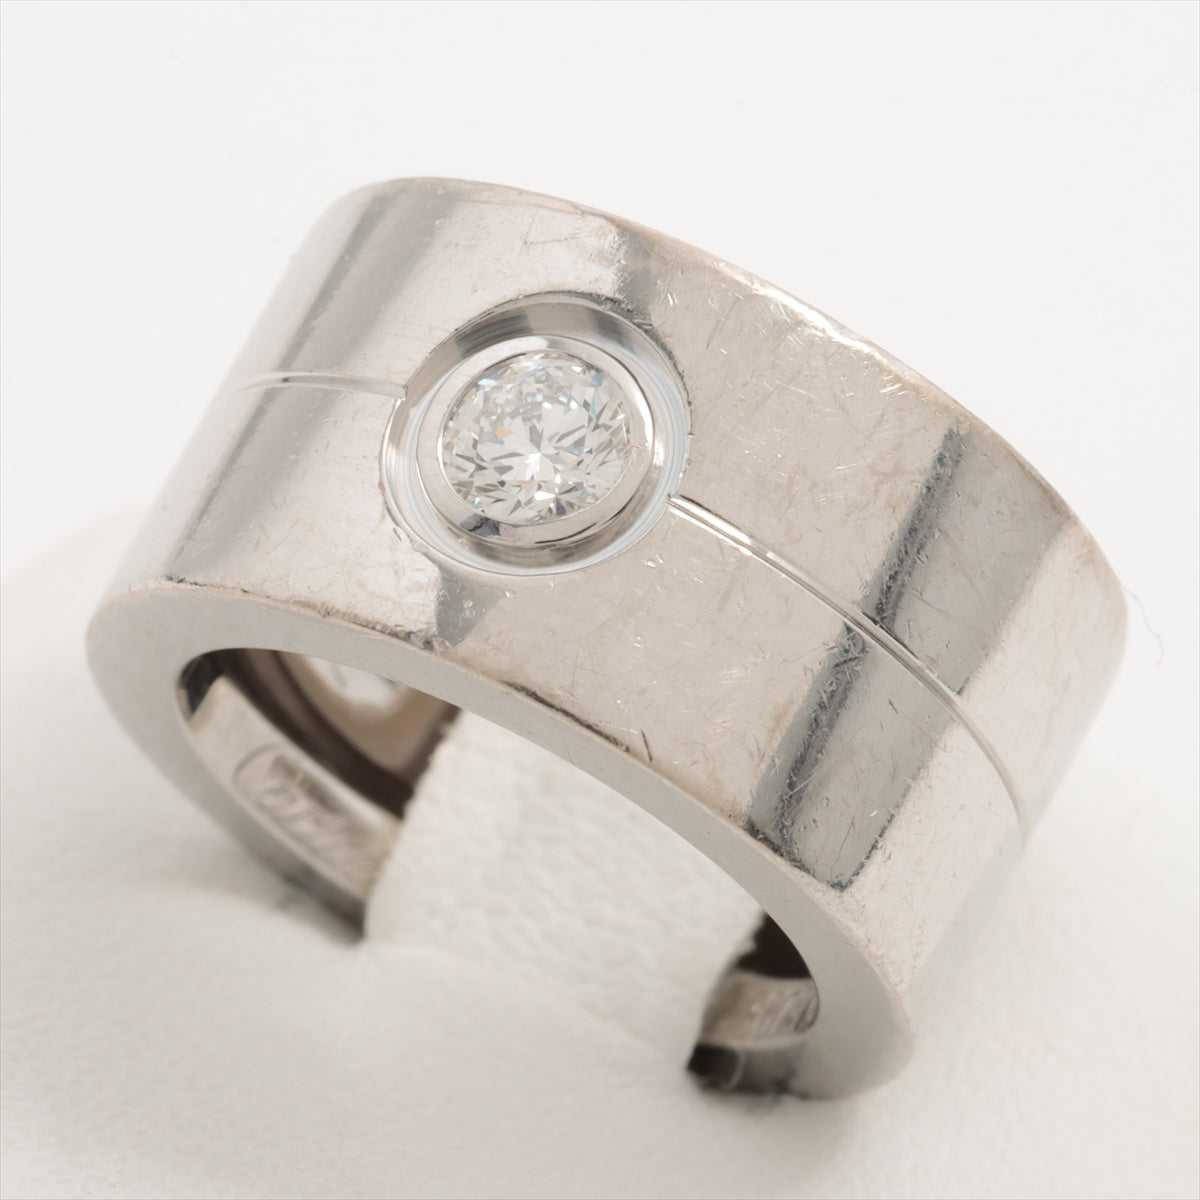 Cartier High Love diamond rings 750(WG) 17.0g 47